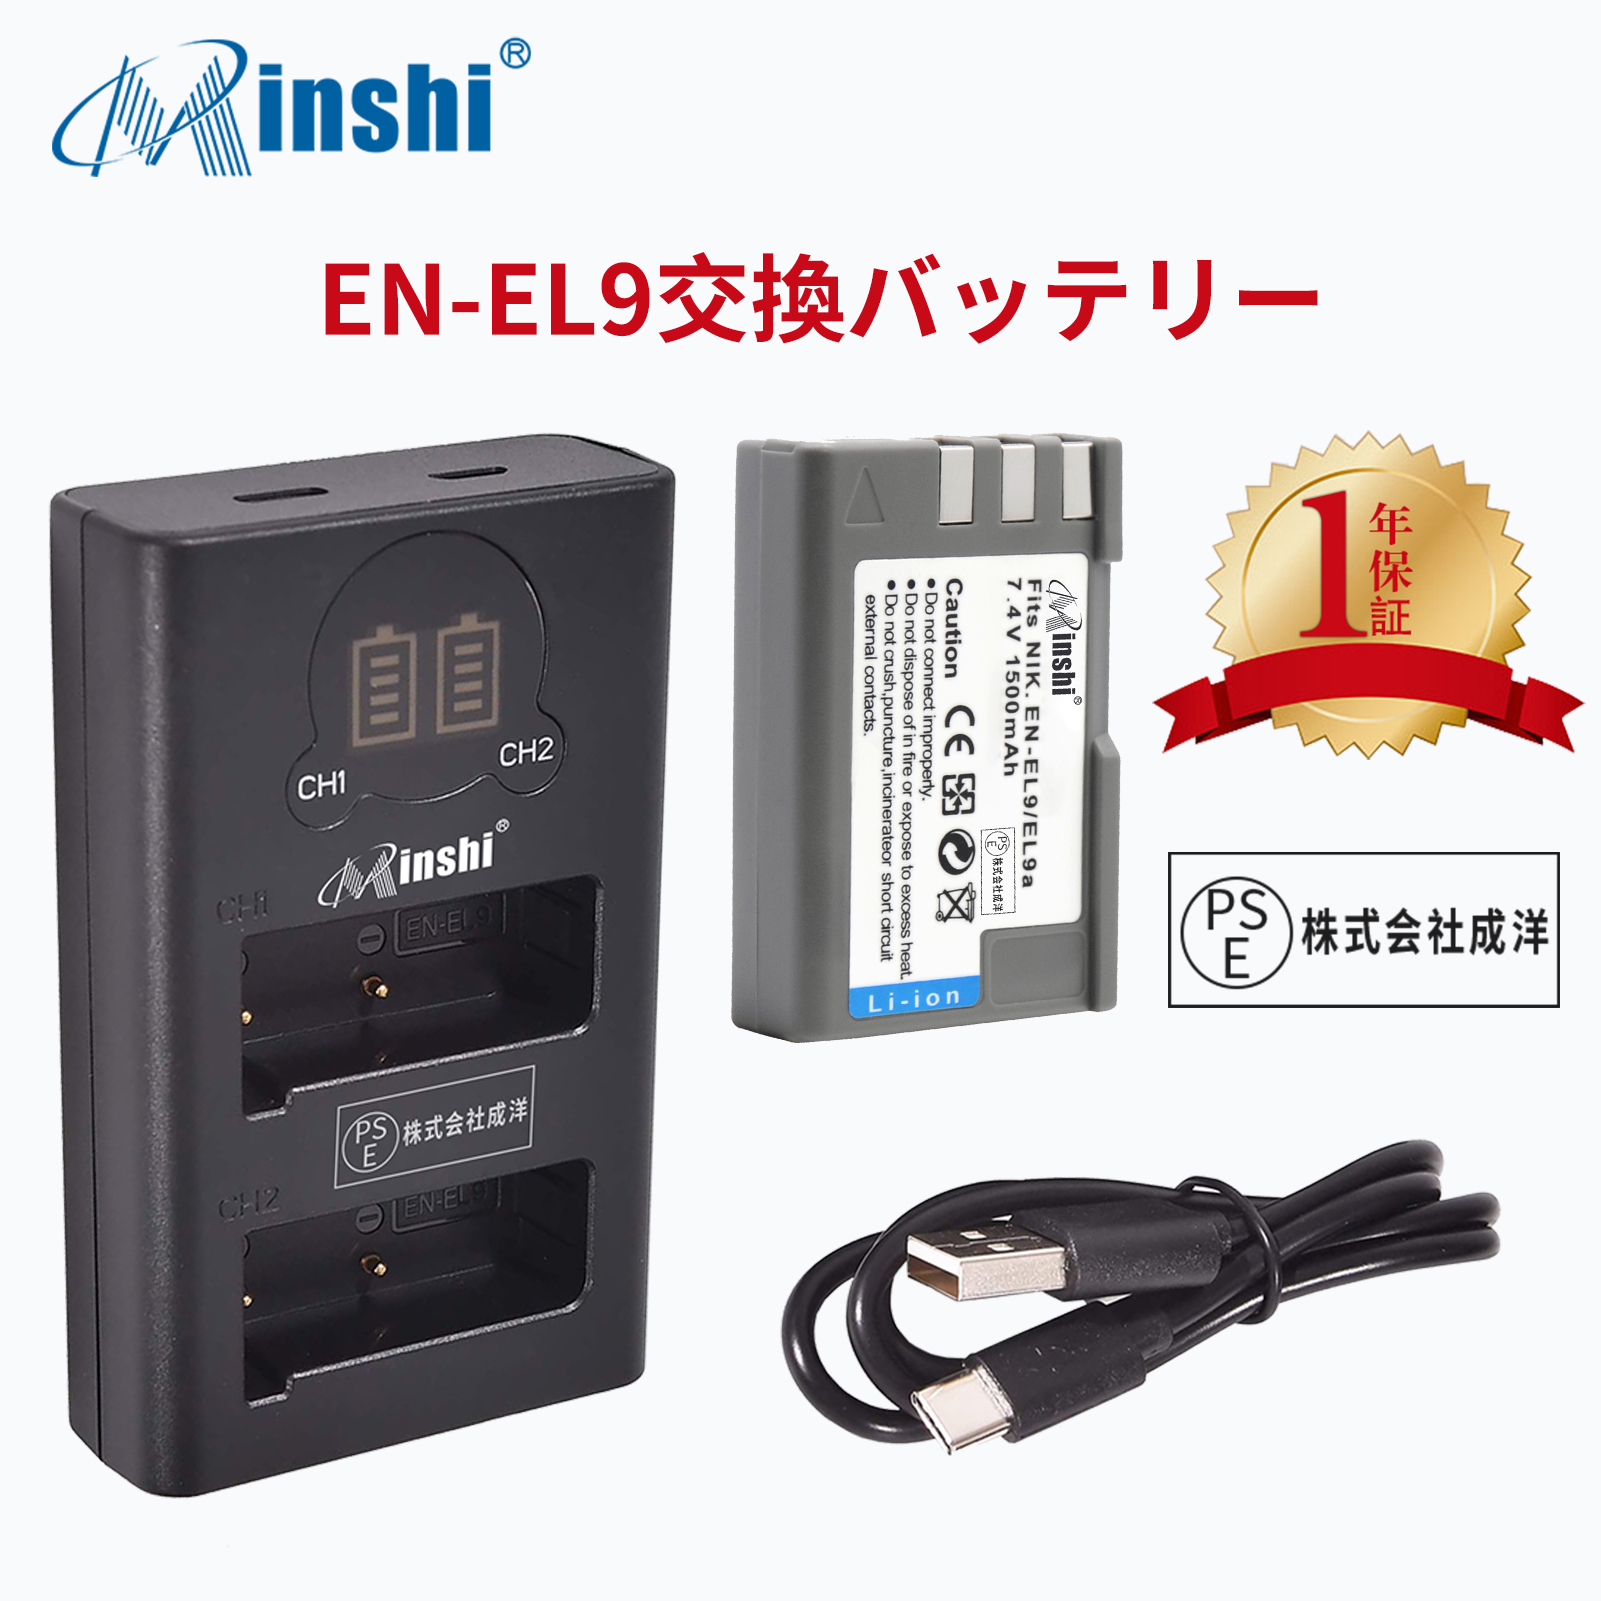 【1年保証】minshi NIKON D3000【1500mAh 7.4V】 【互換急速USBチャージャー】PSE認定済 高品質EN-EL9 EN-EL9a EN-EL9e互換バッテリーPHB